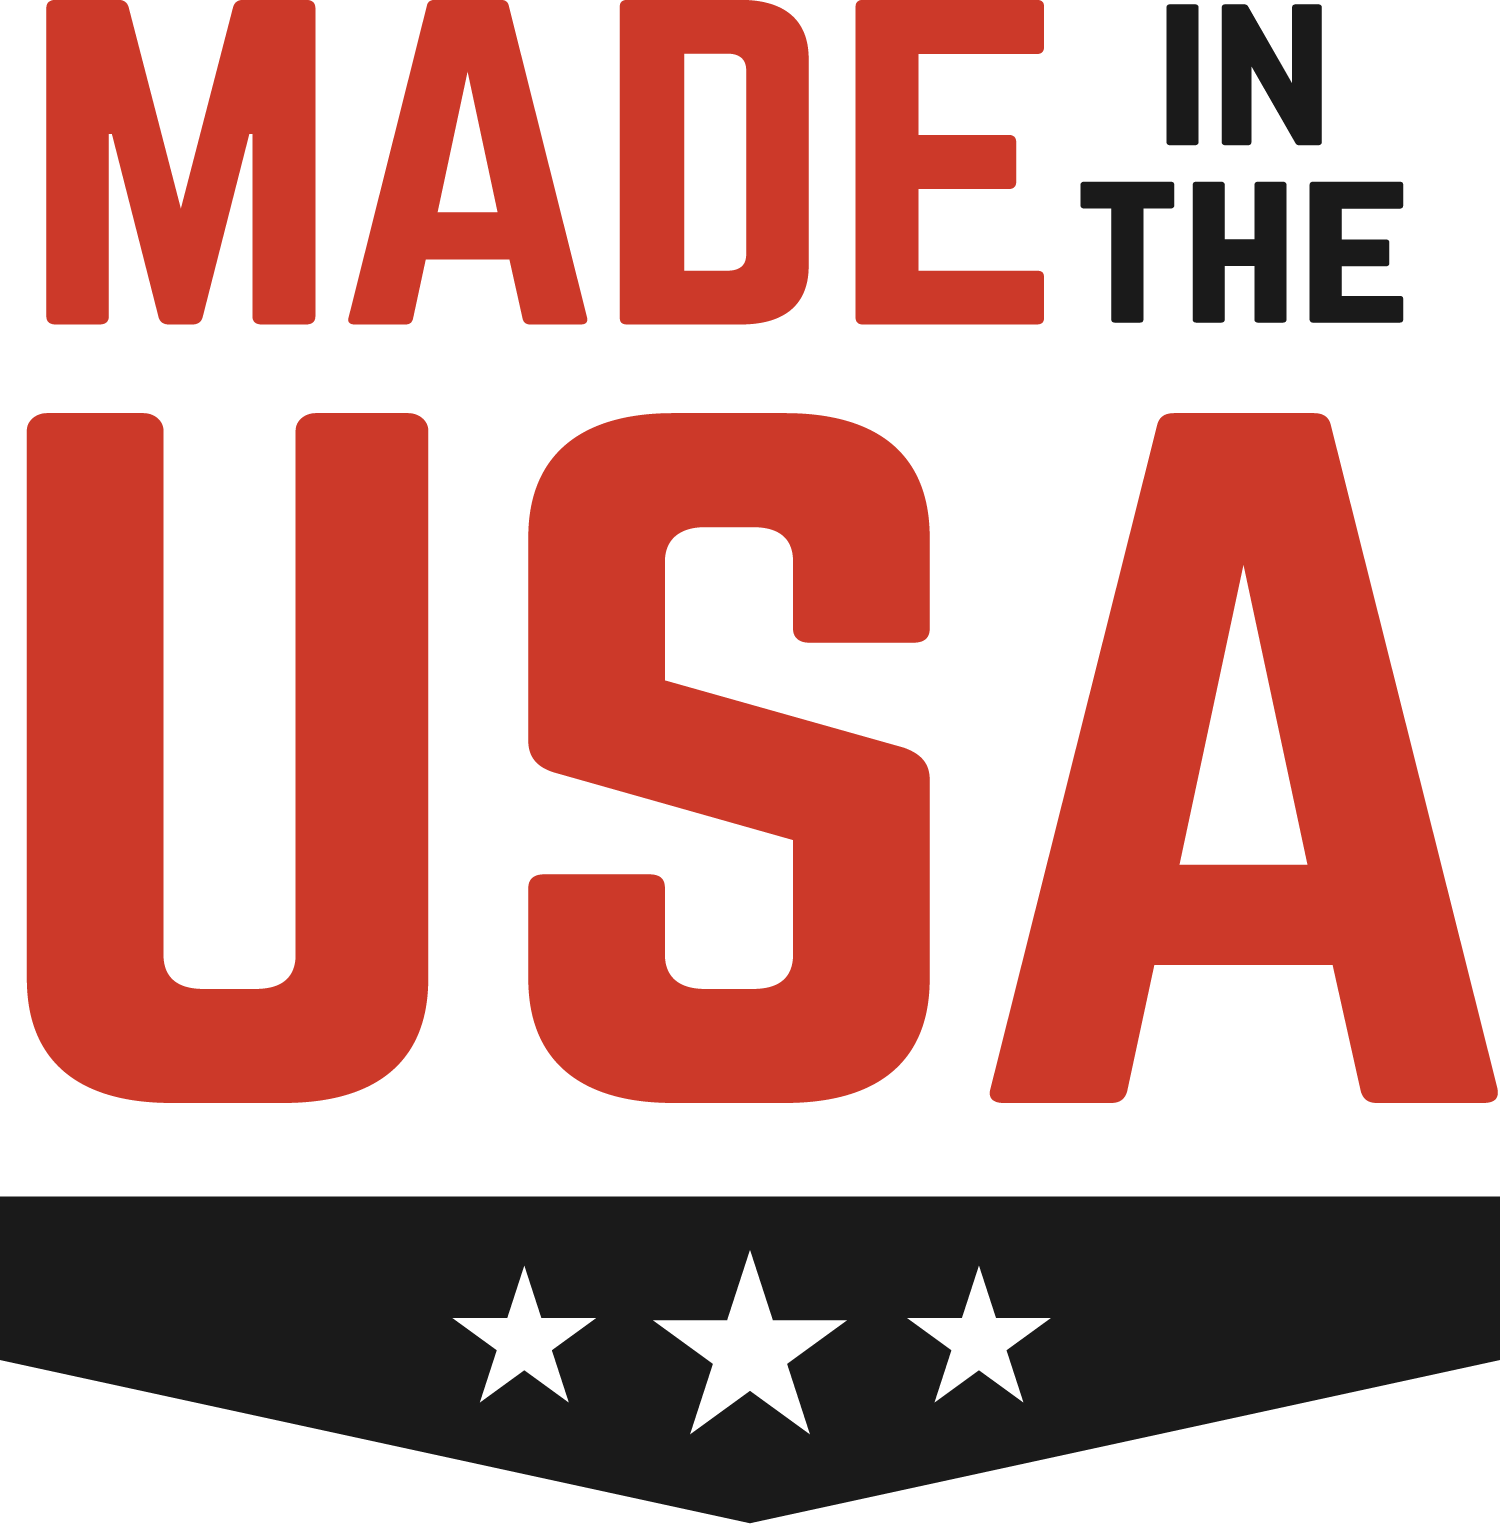 MudGear Quarter (¼) Crew Socks - Black/Orange (2 pair pack) is Made in the USA